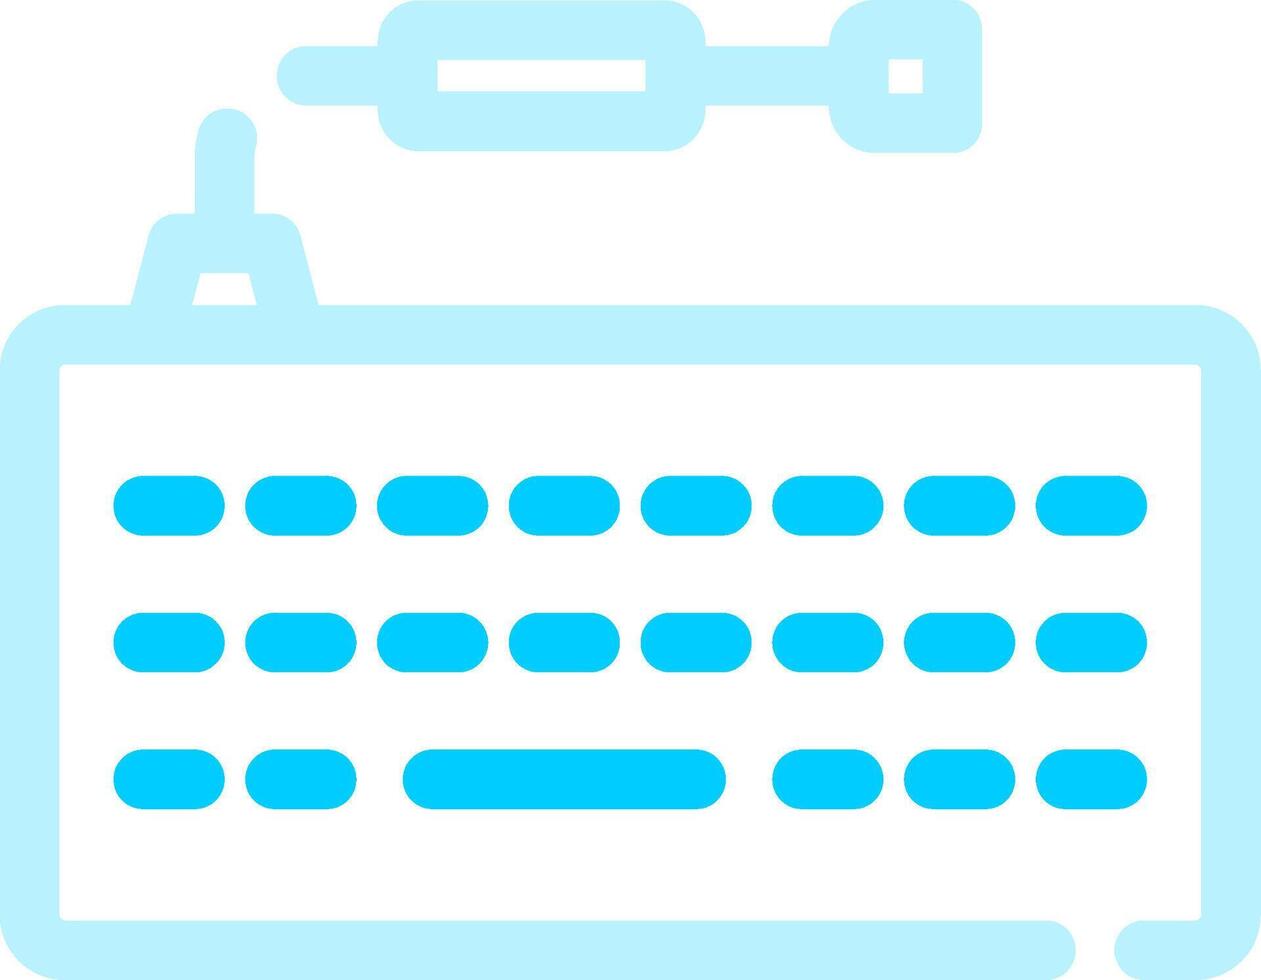 design de ícone criativo de teclado vetor